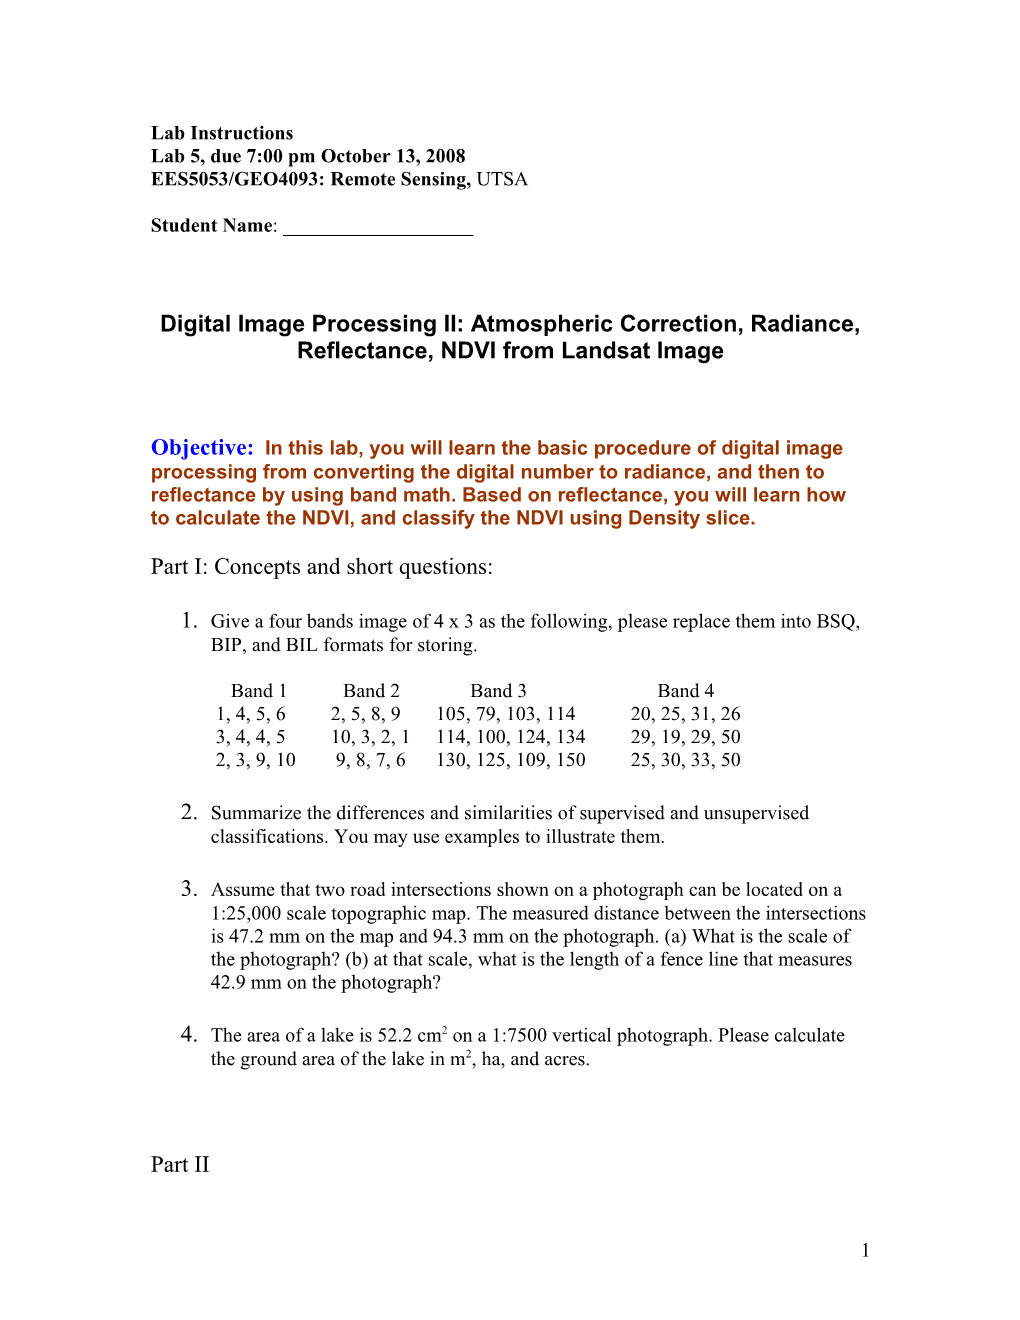 Digital Image Processing II: Atmospheric Correction, Radiance, Reflectance, NDVI From